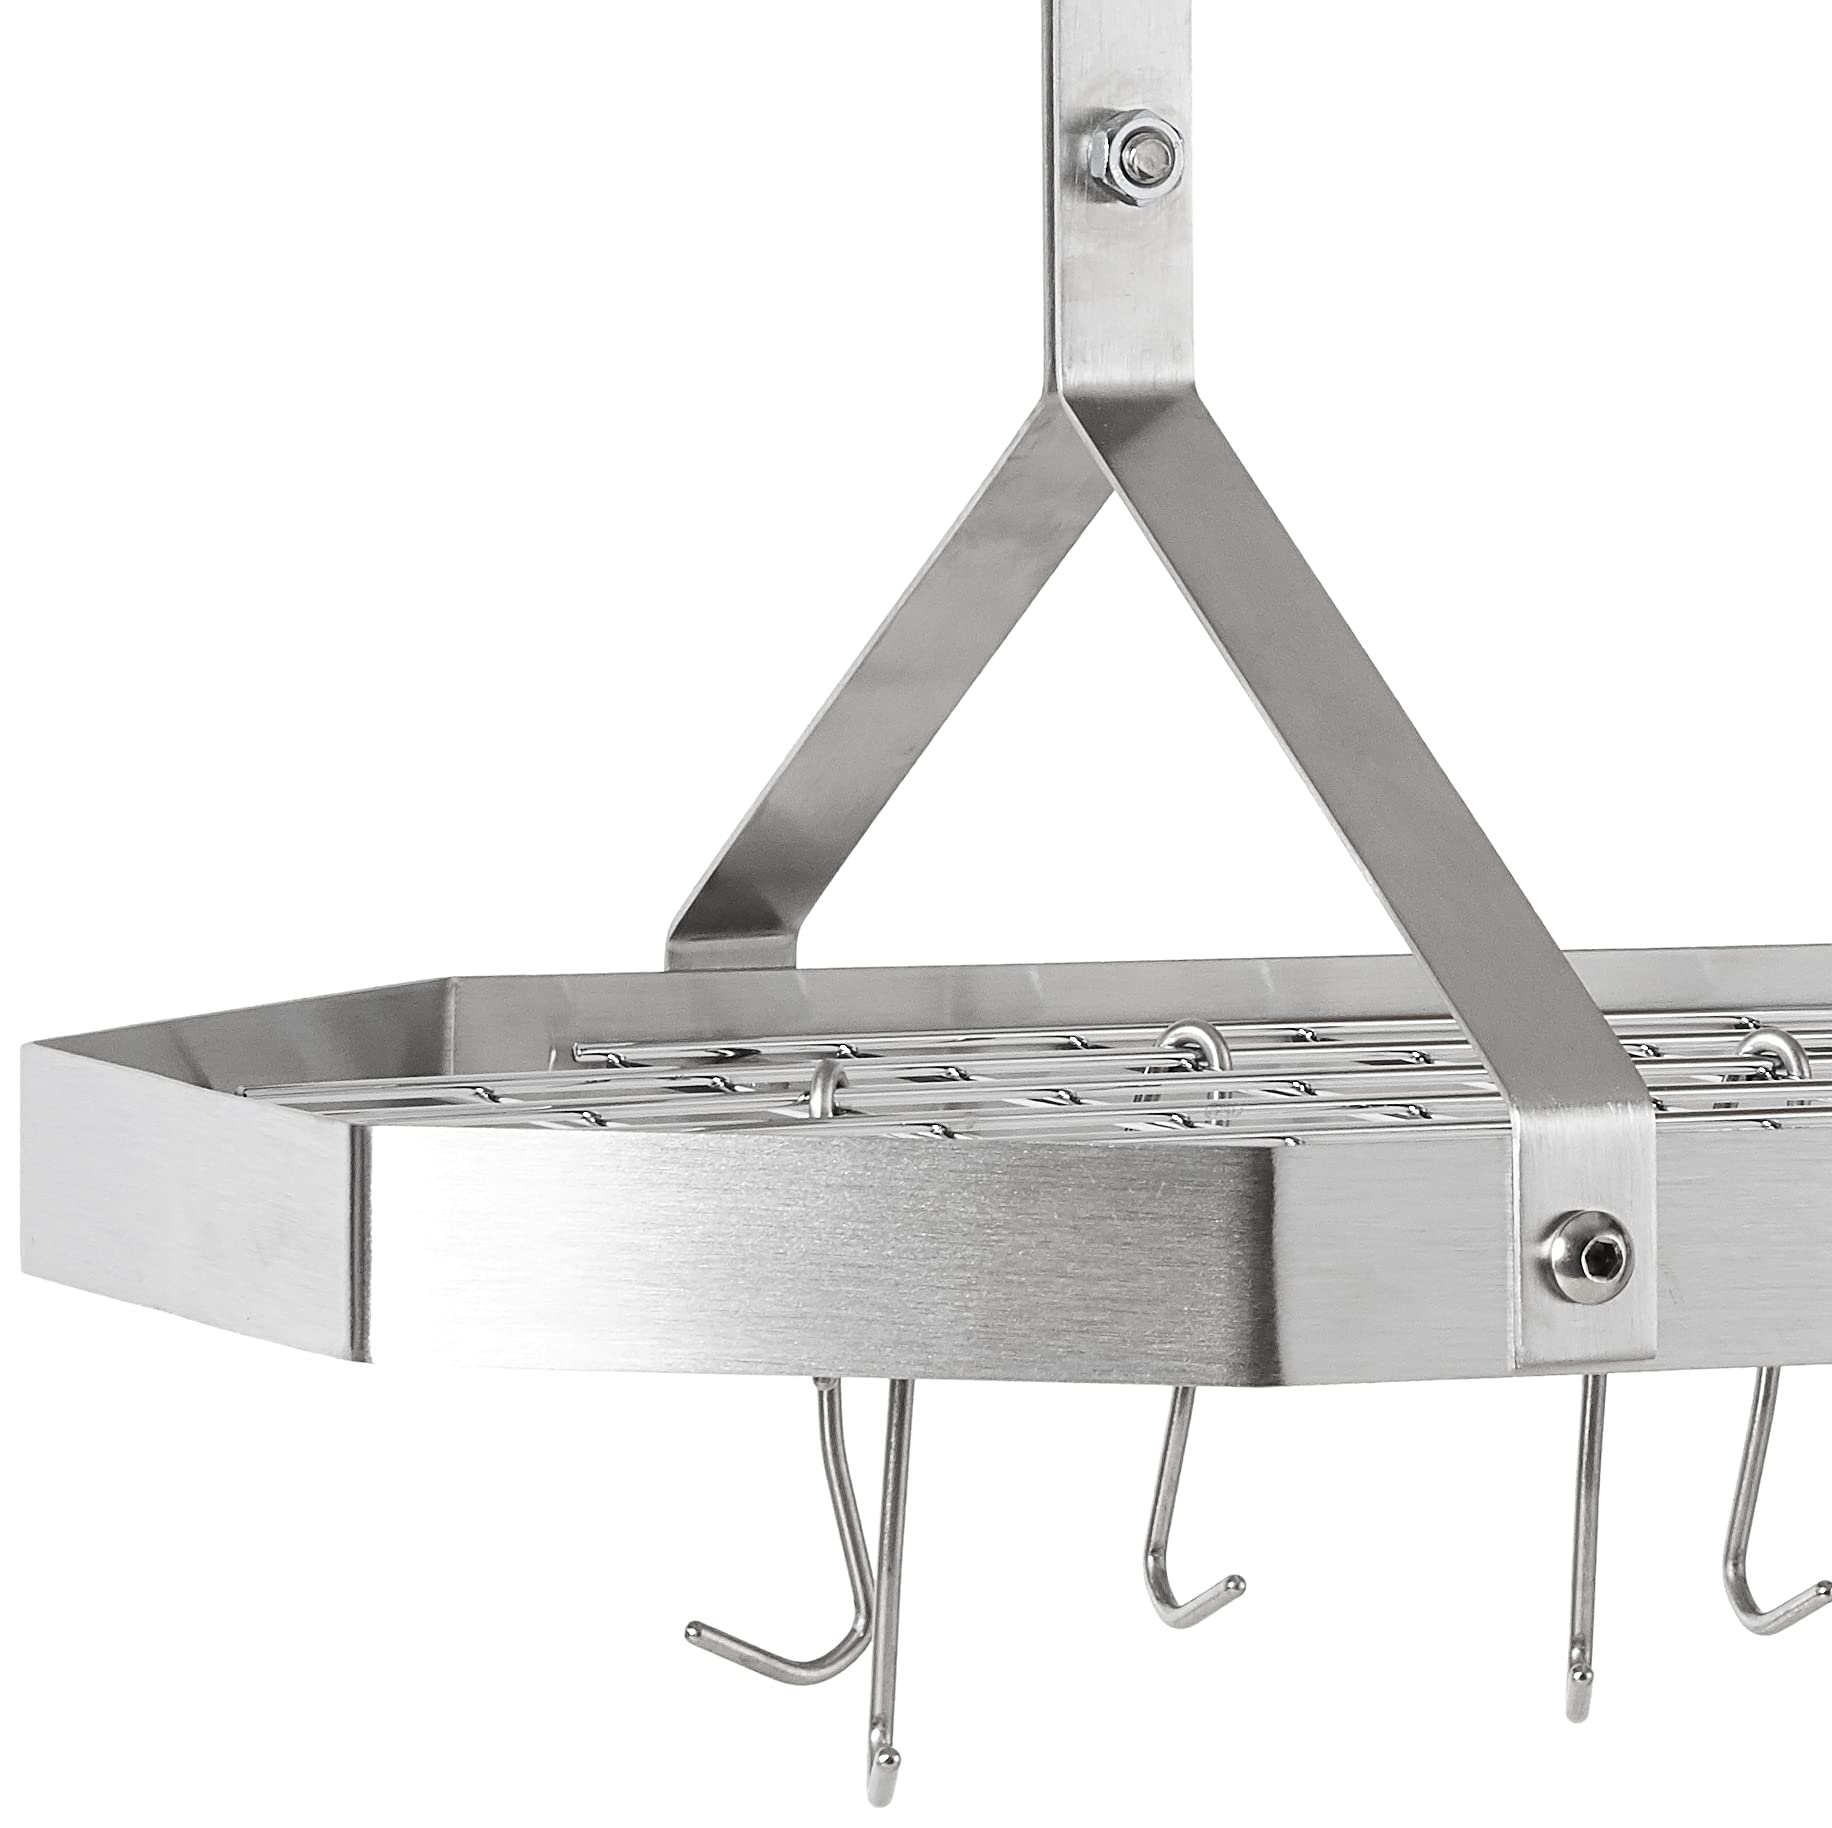 Cuisinart Octagonal Hanging Cookware Rack,Stainless steel